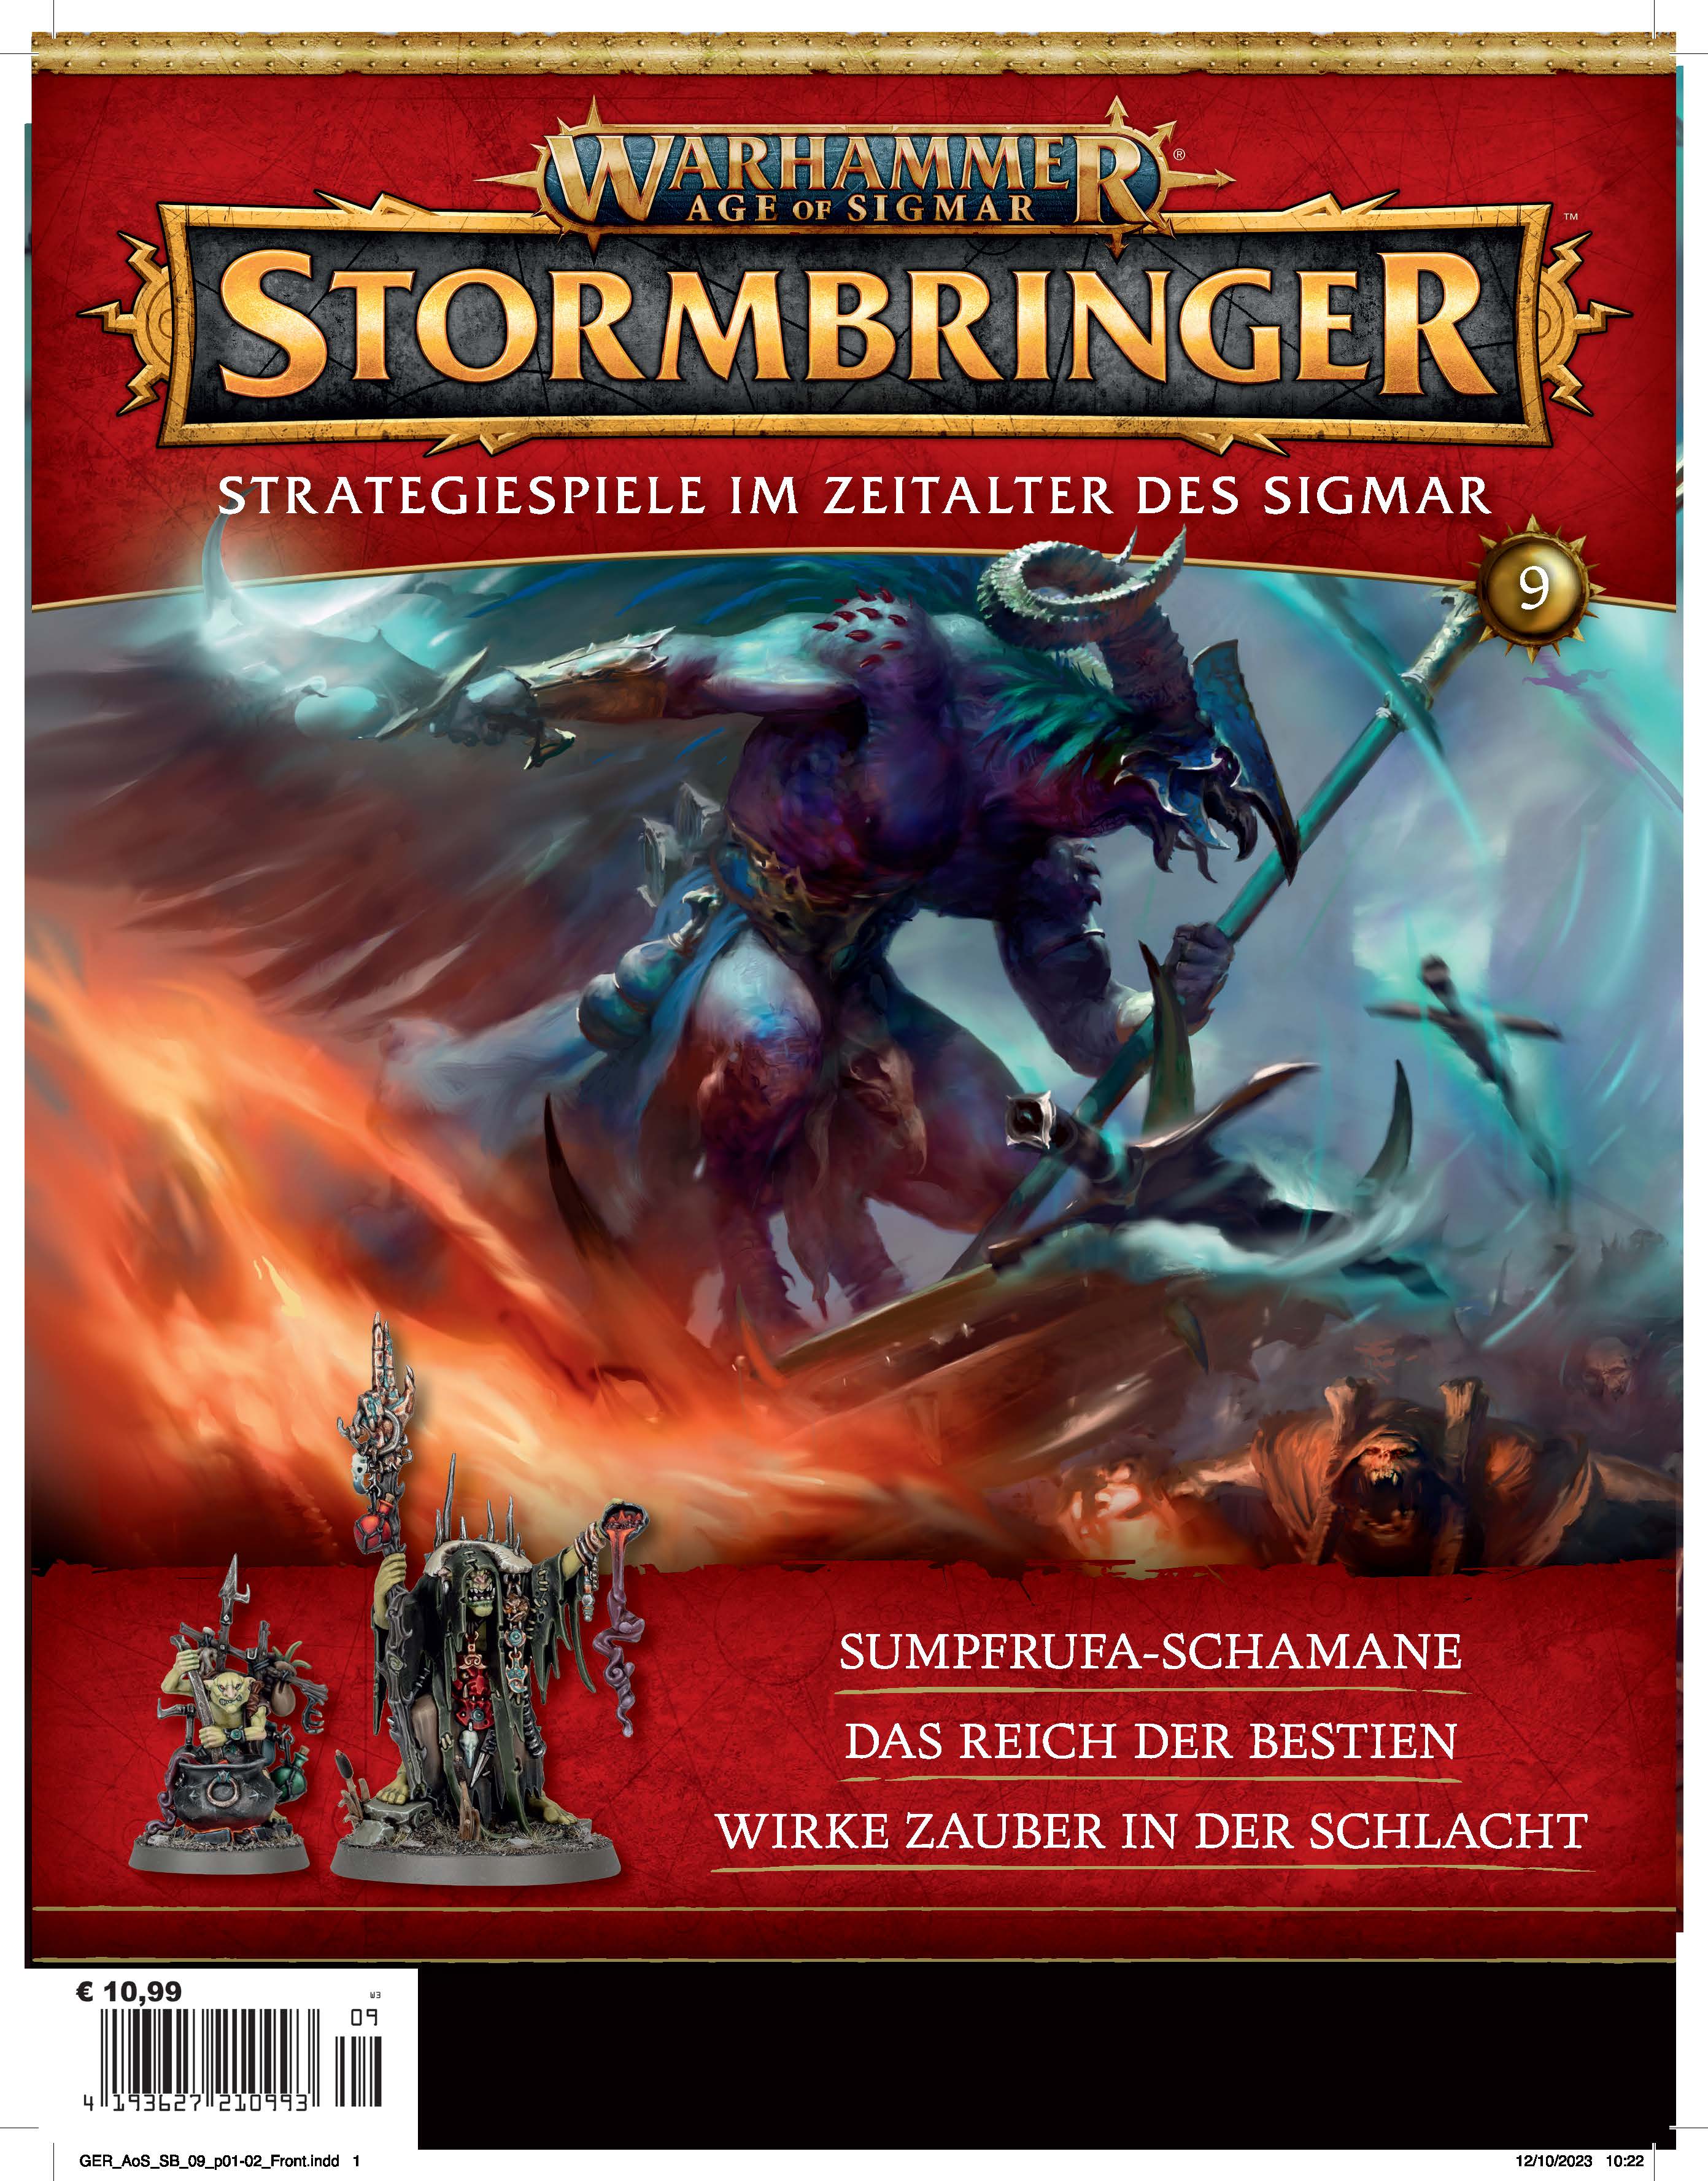 Warhammer Stormbringer – Ausgabe 009